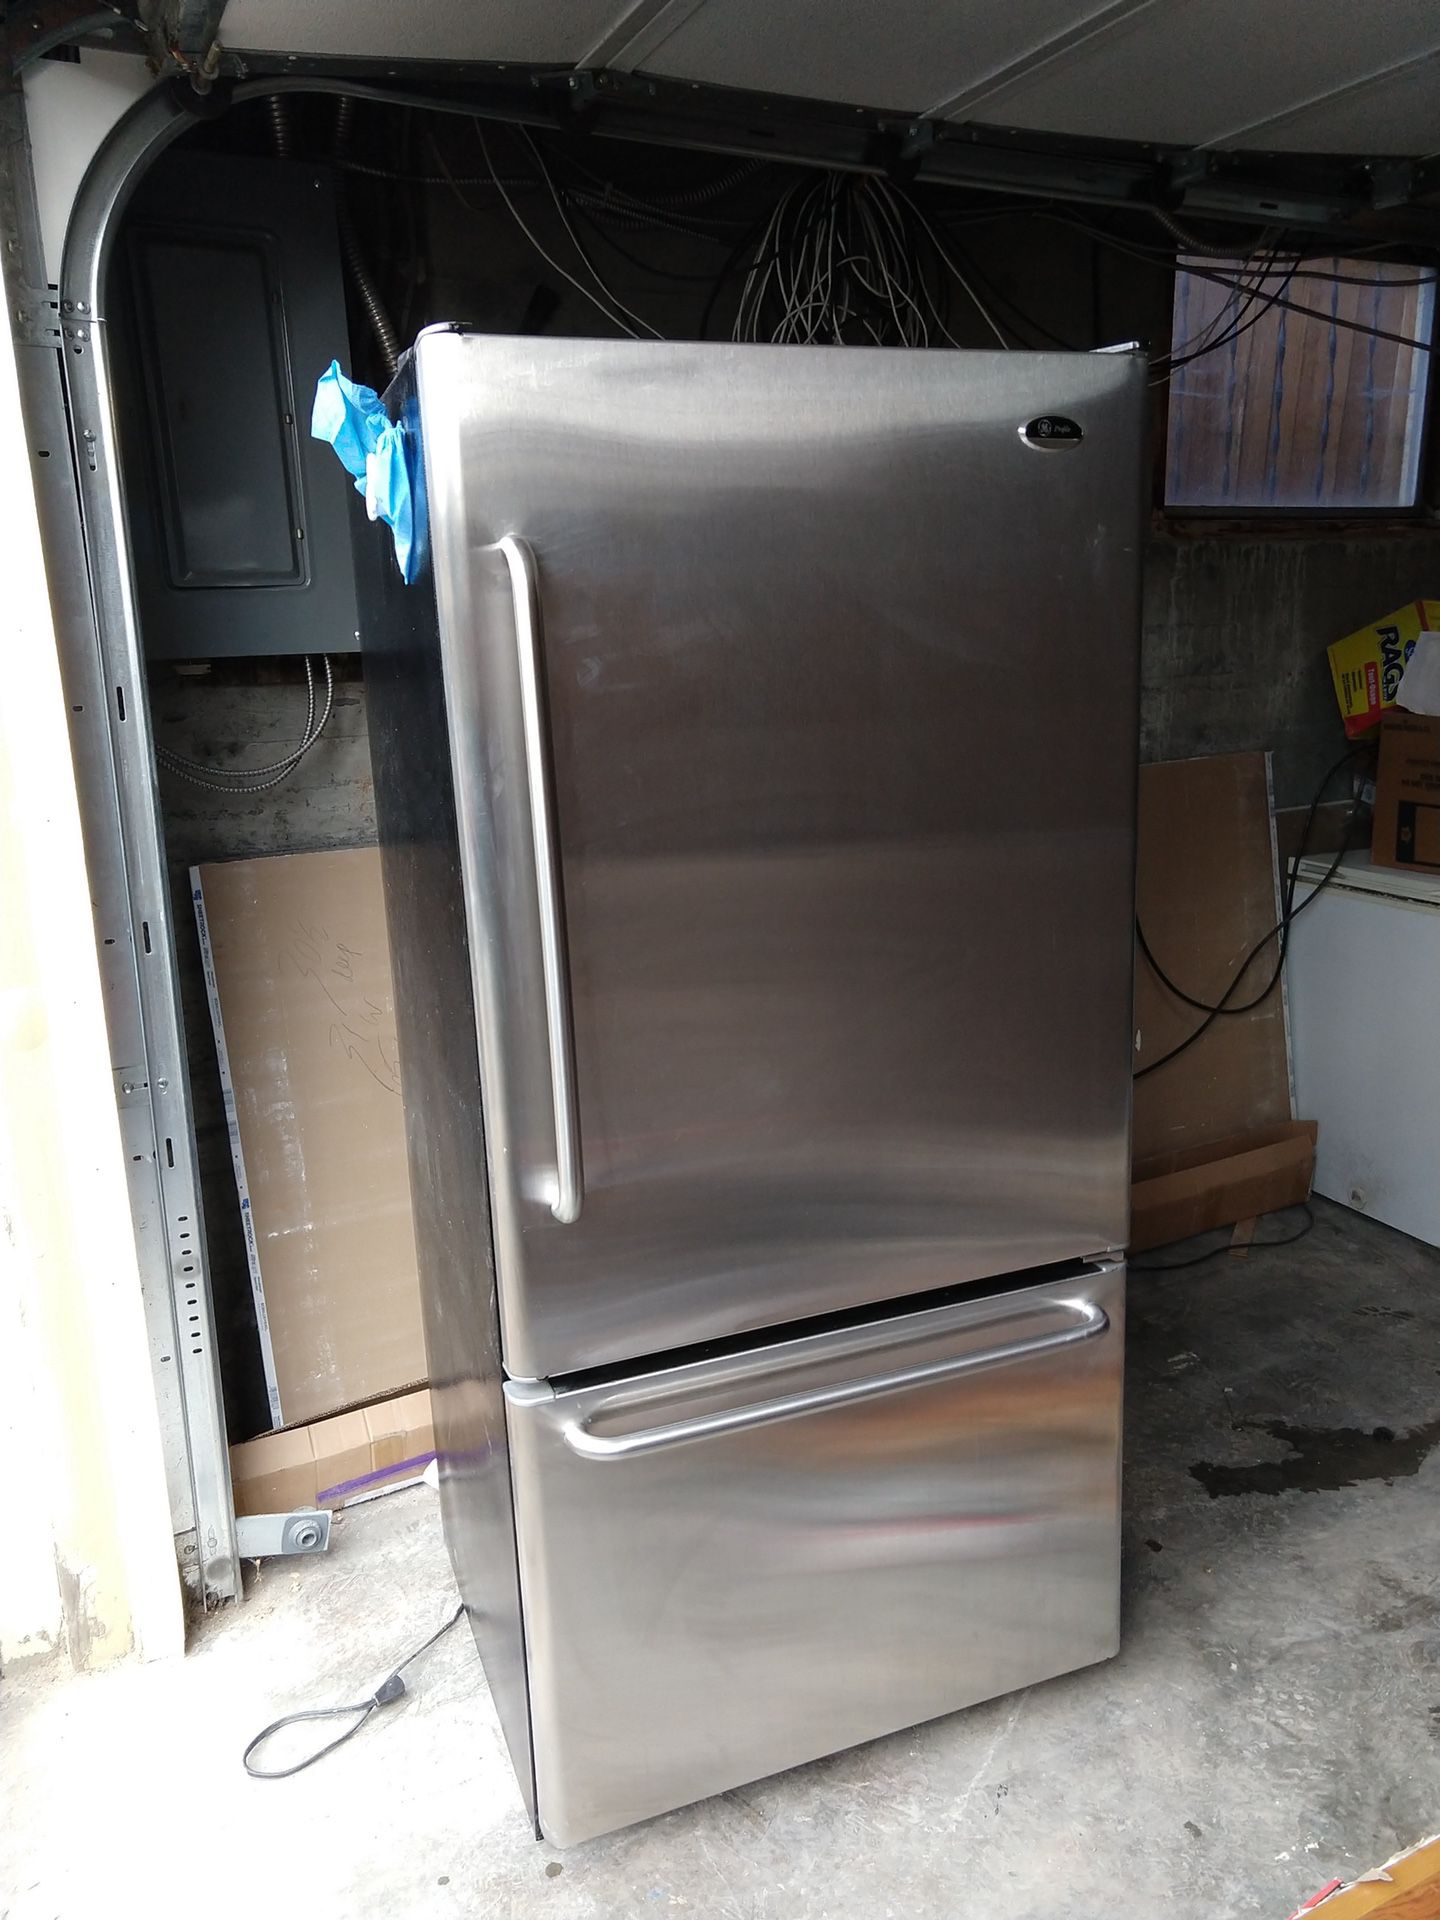 Refrigerator, GE profile refrigerator. General electric, bottom freezer